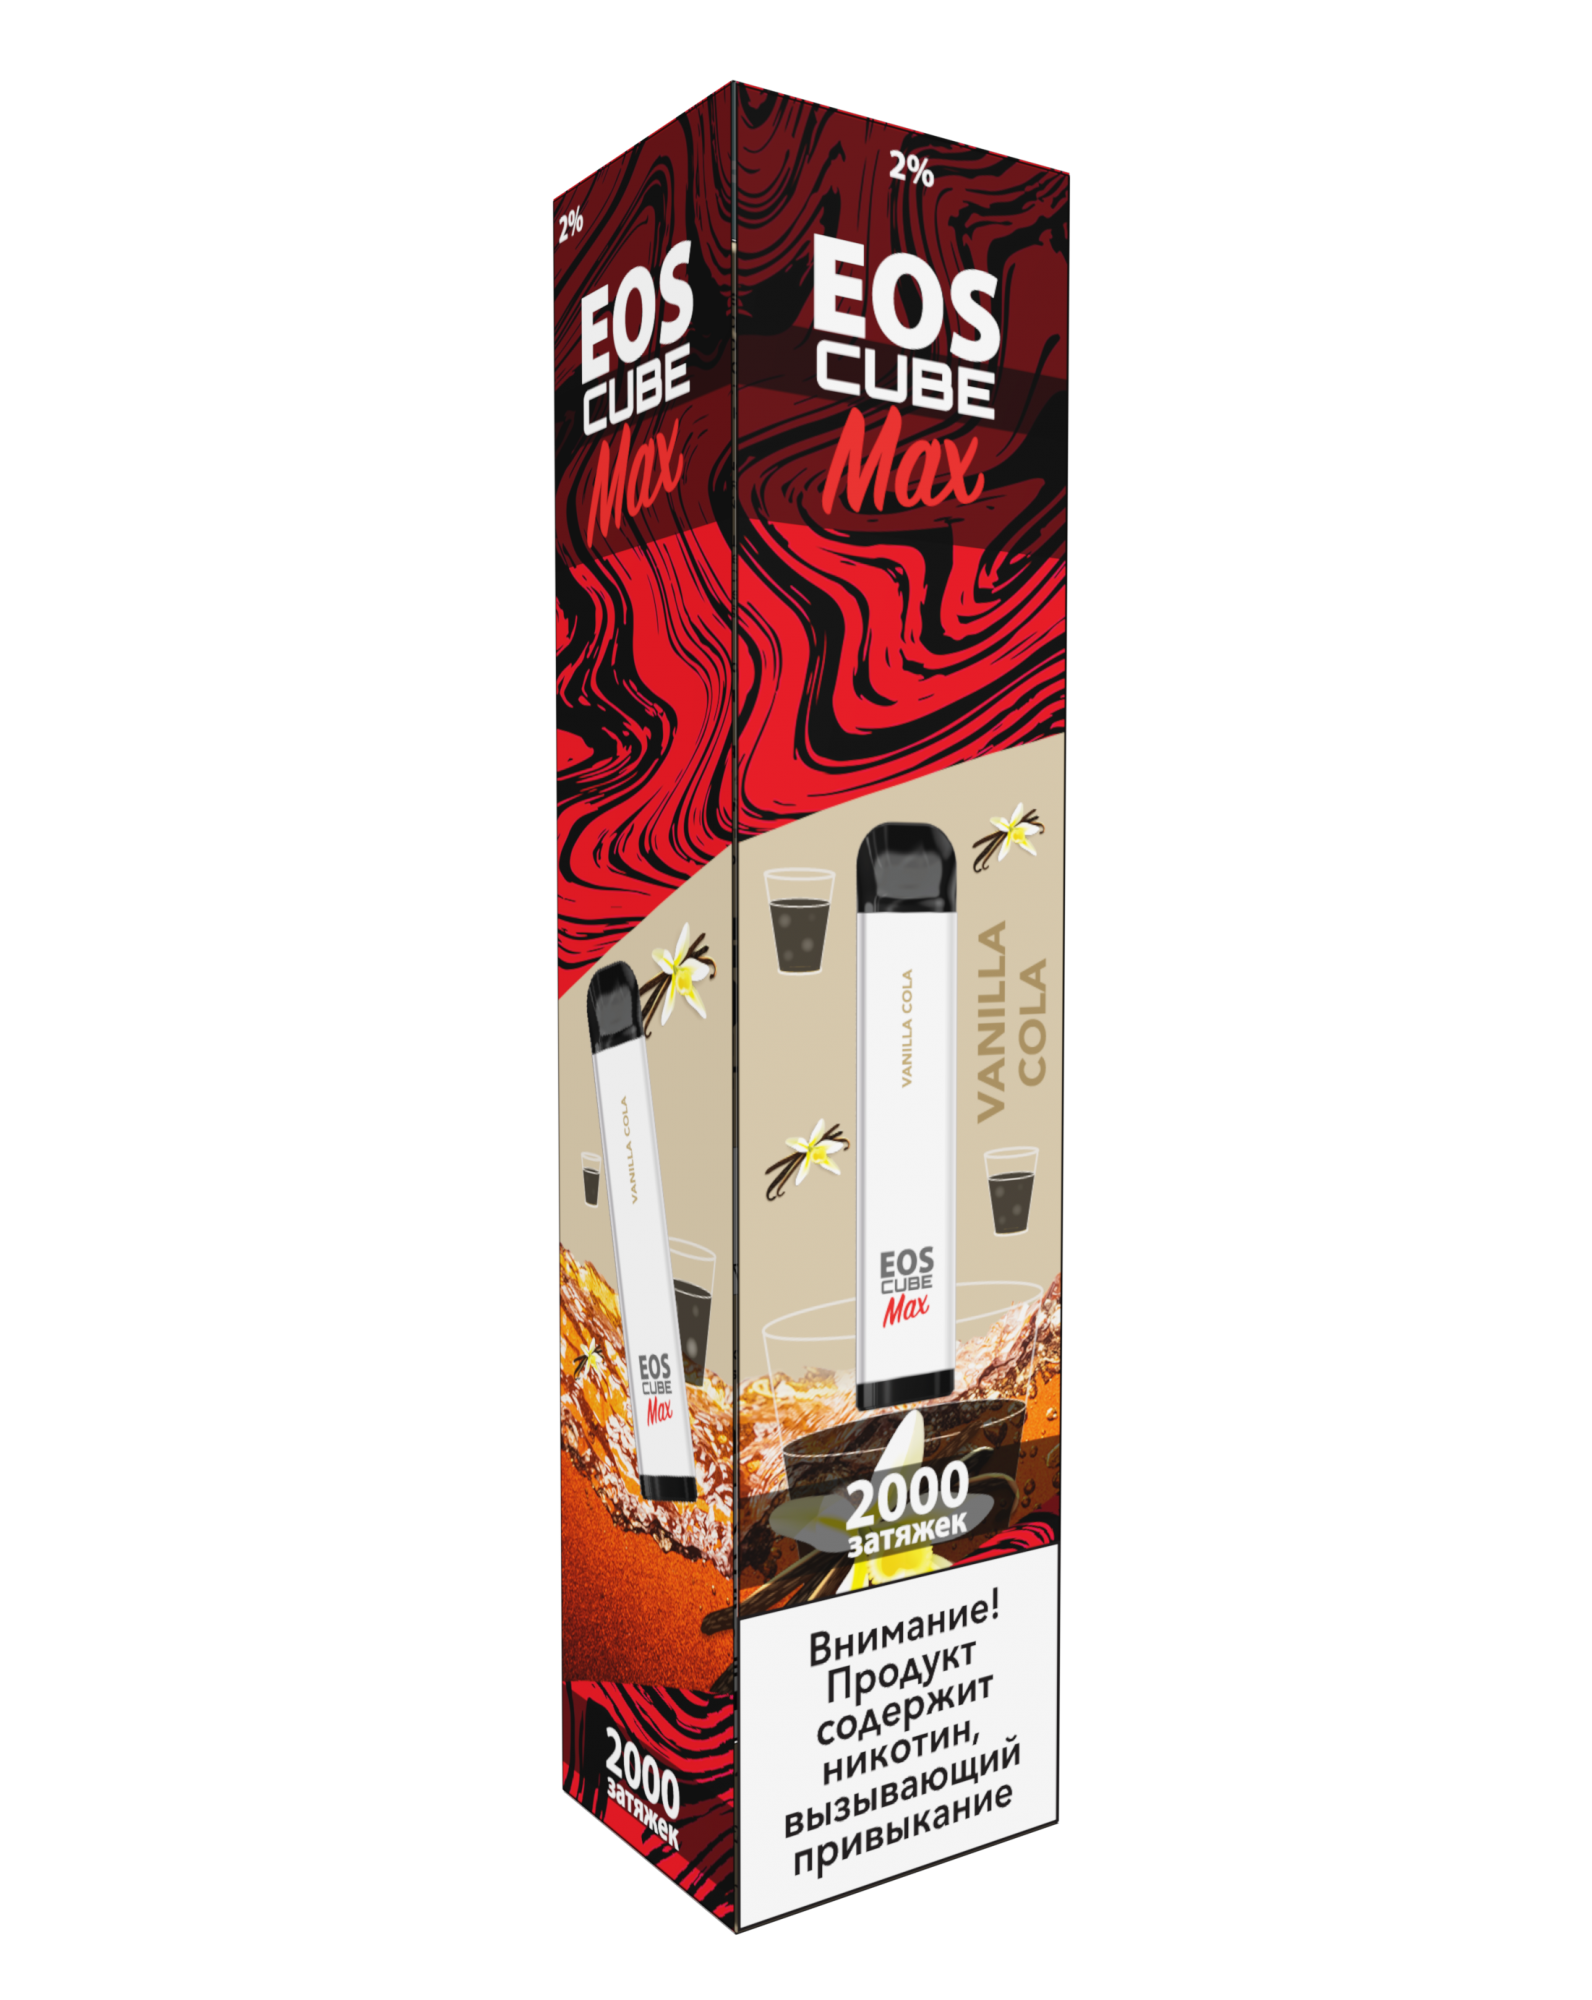 EOS Cube Max. EOS Cube Max 2000. EOS электронная сигарета одноразовая. Одноразки EOS Cube. Cube max